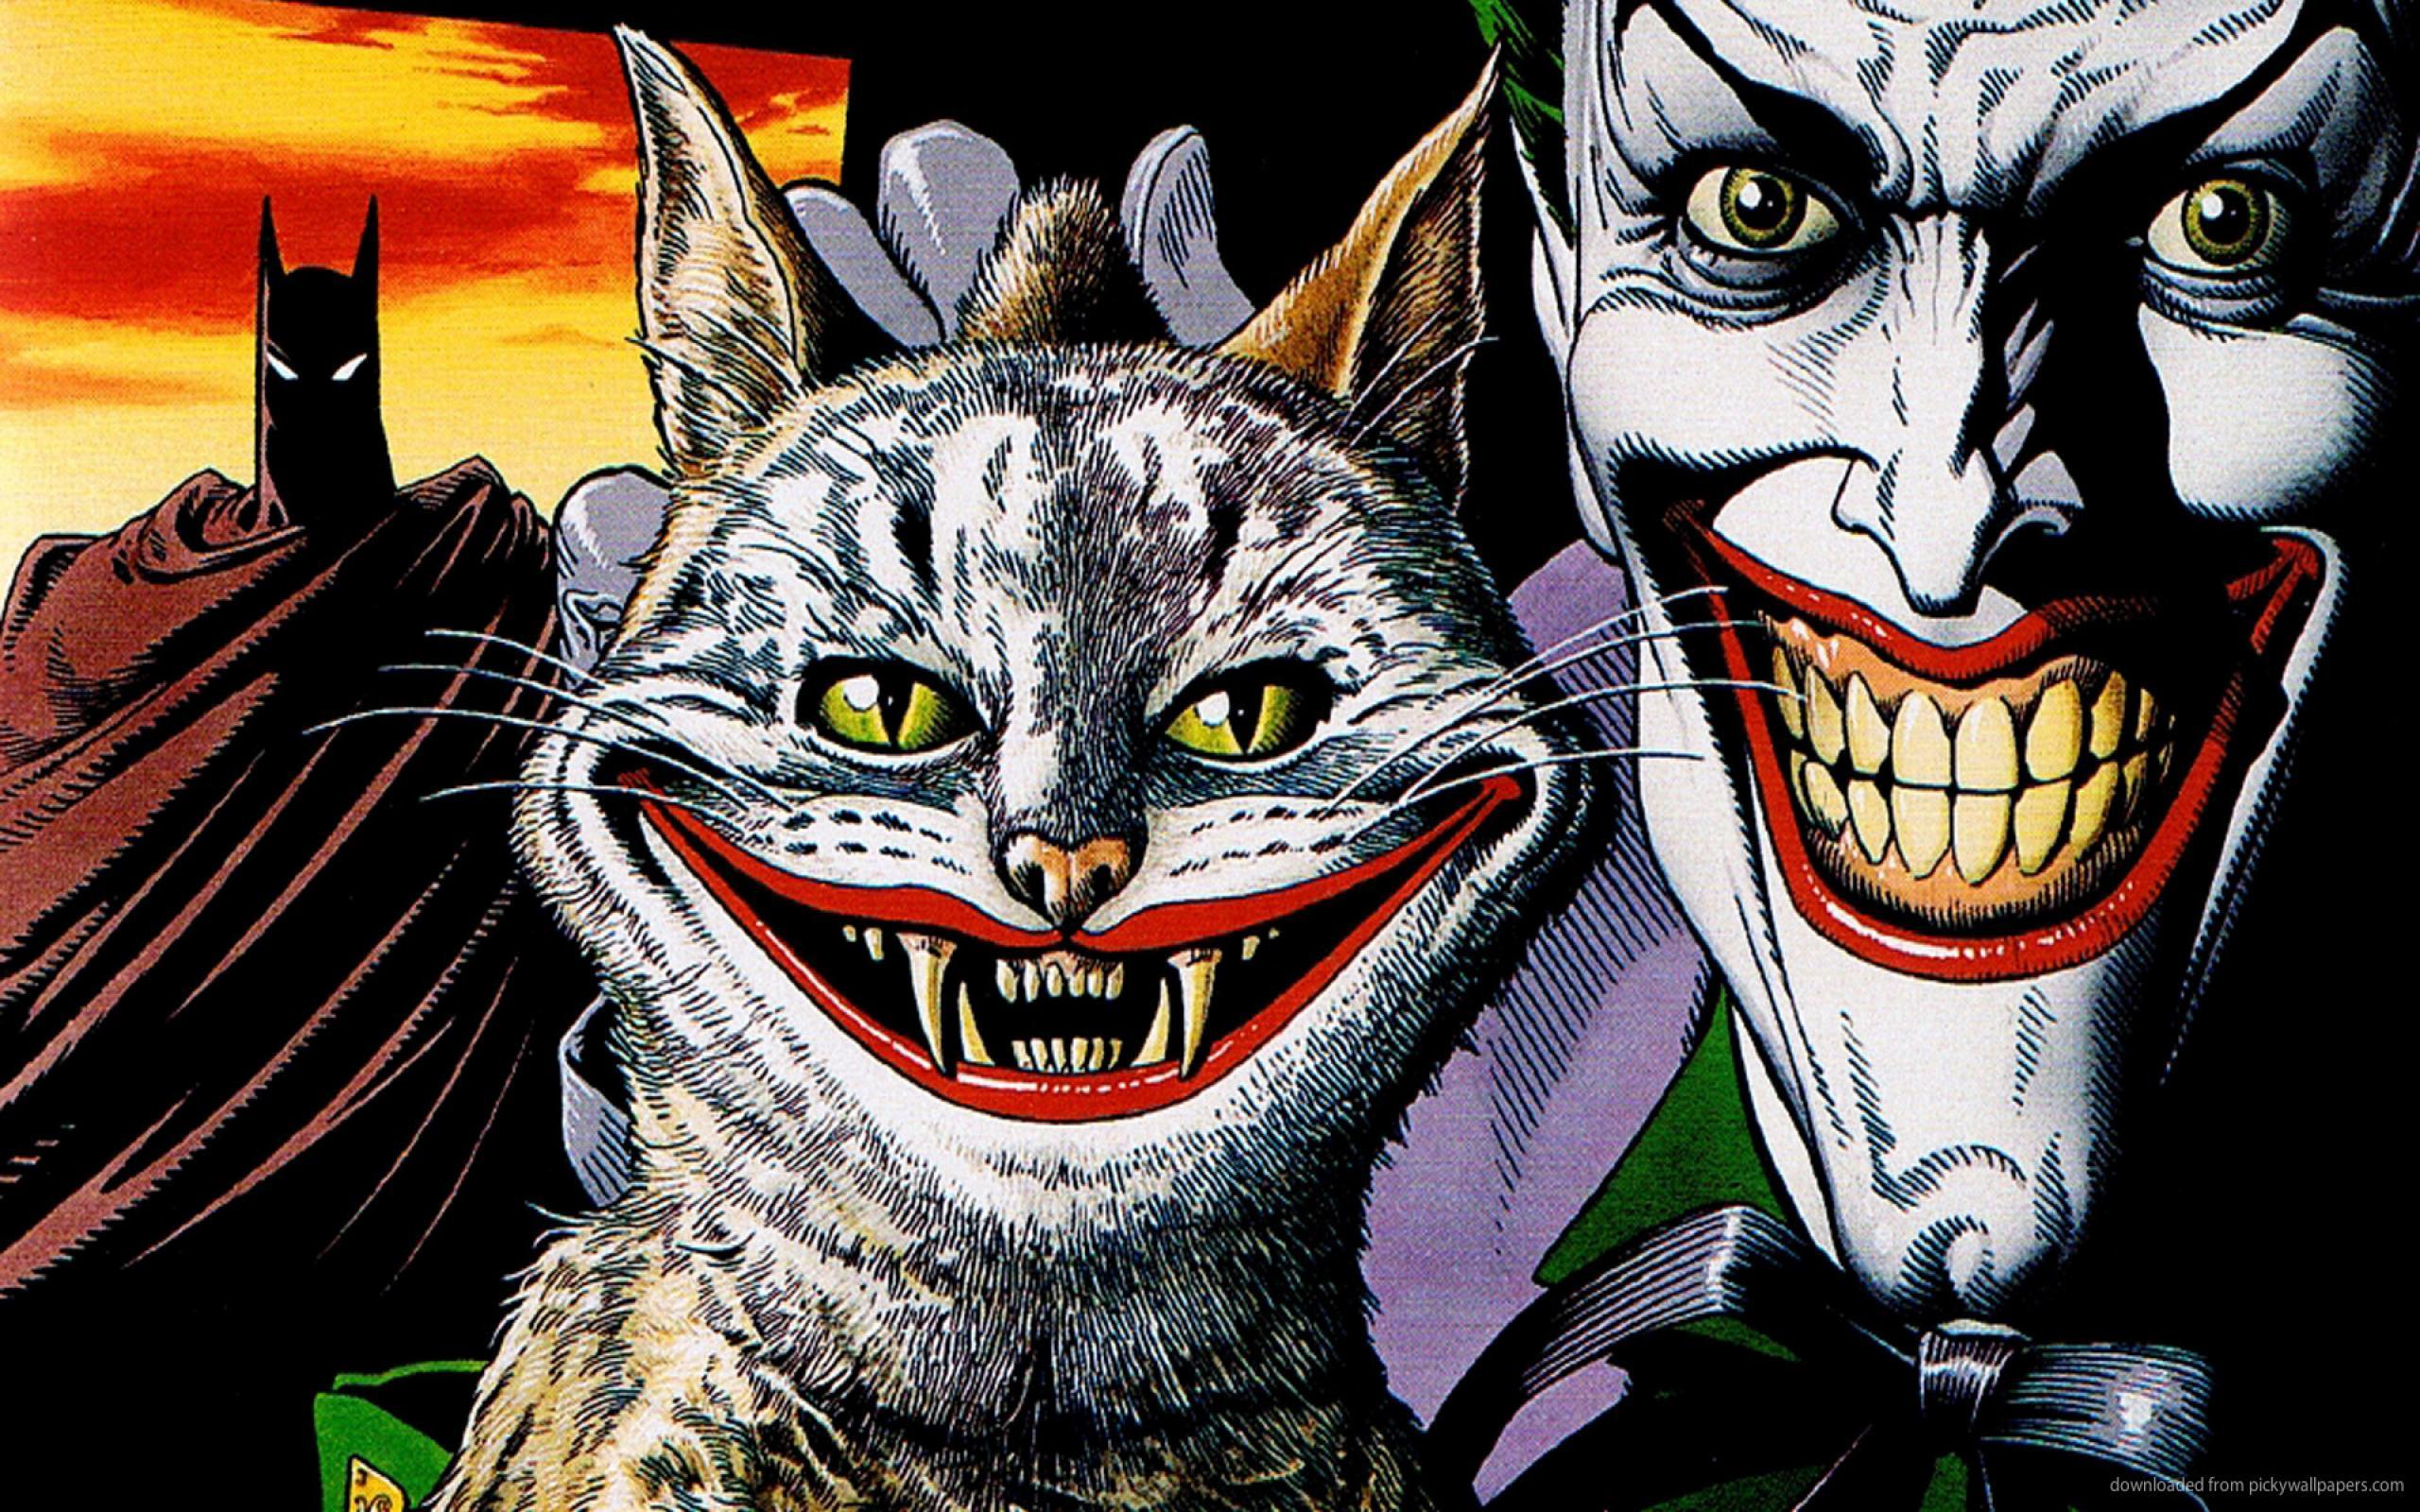 2. The Joker's iconic green hair in the Batman comics - wide 8